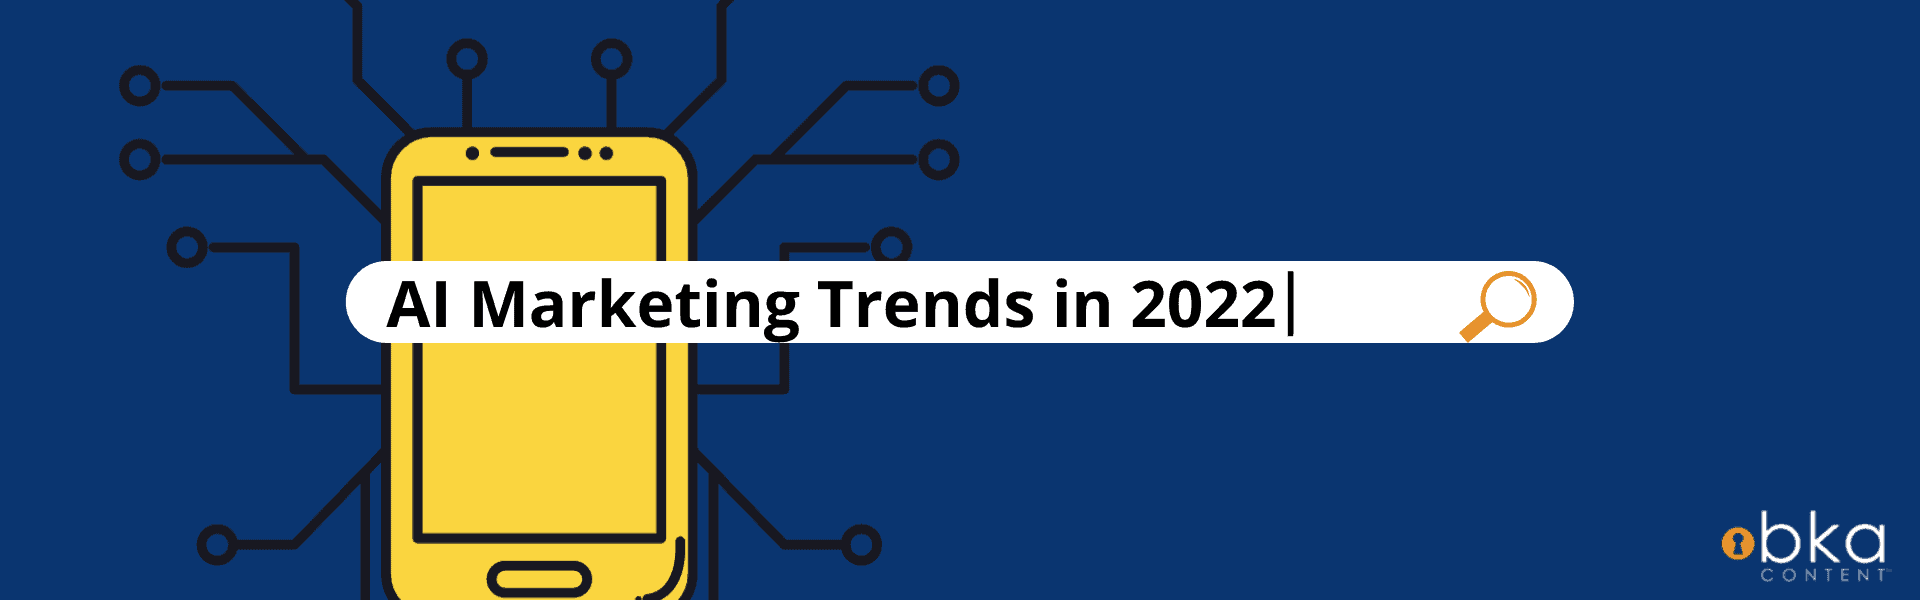 ai marketing trends in 2022